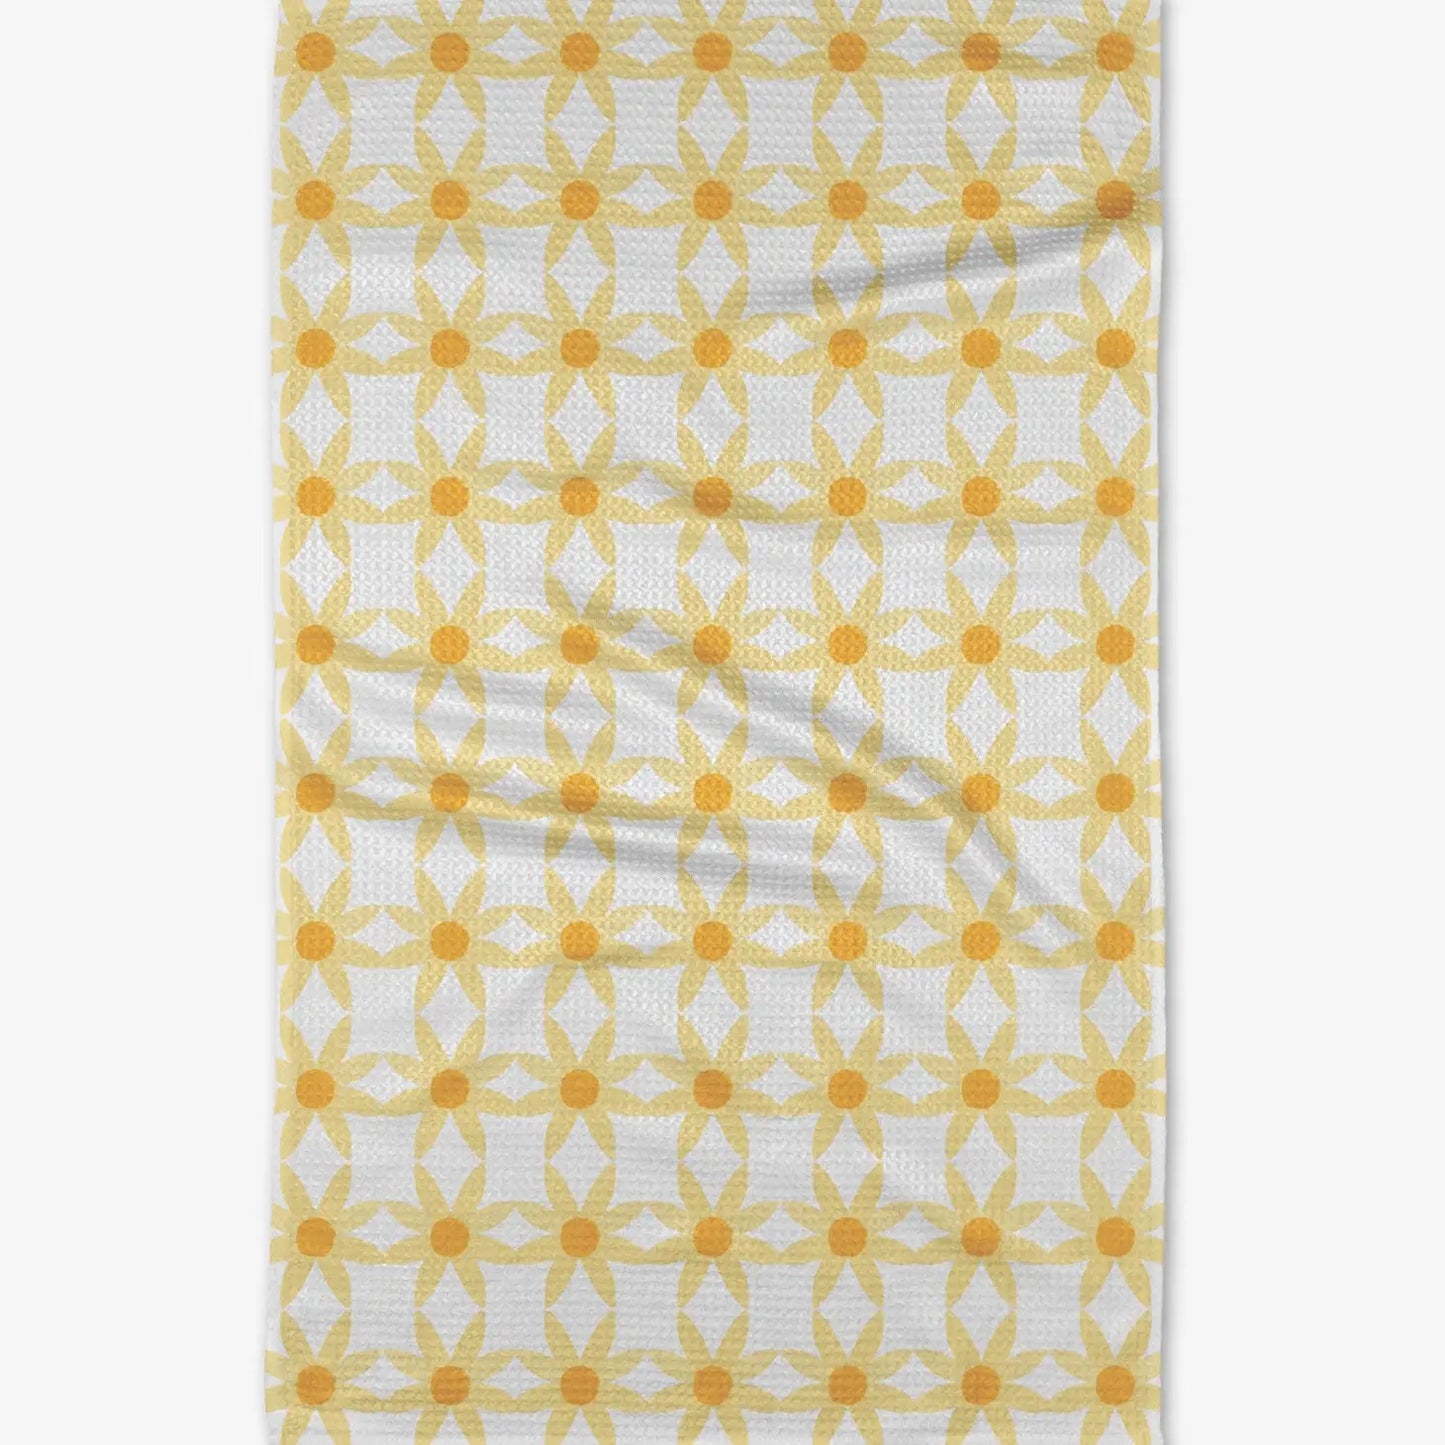 Kitchen Tea Towels by Geometry